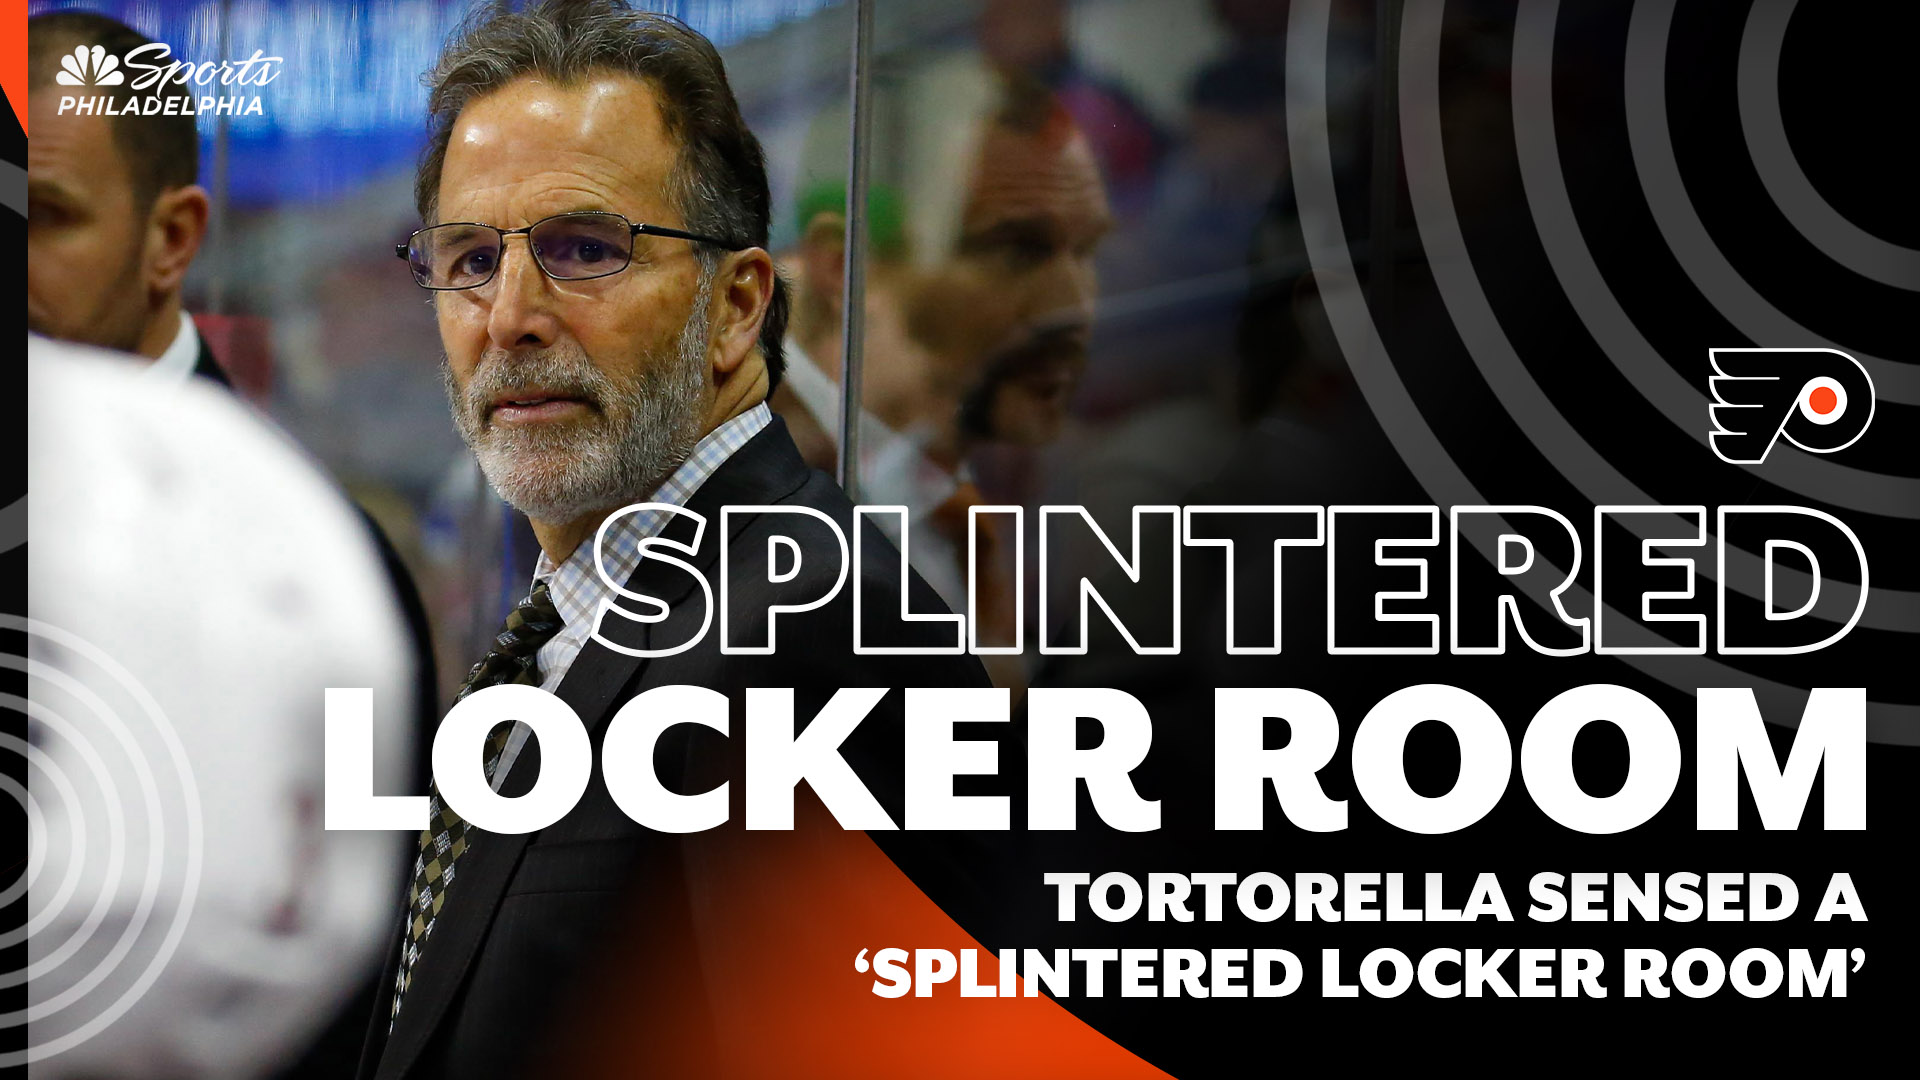 John Tortorella senses Flyers' locker room is 'splintered' – NBC